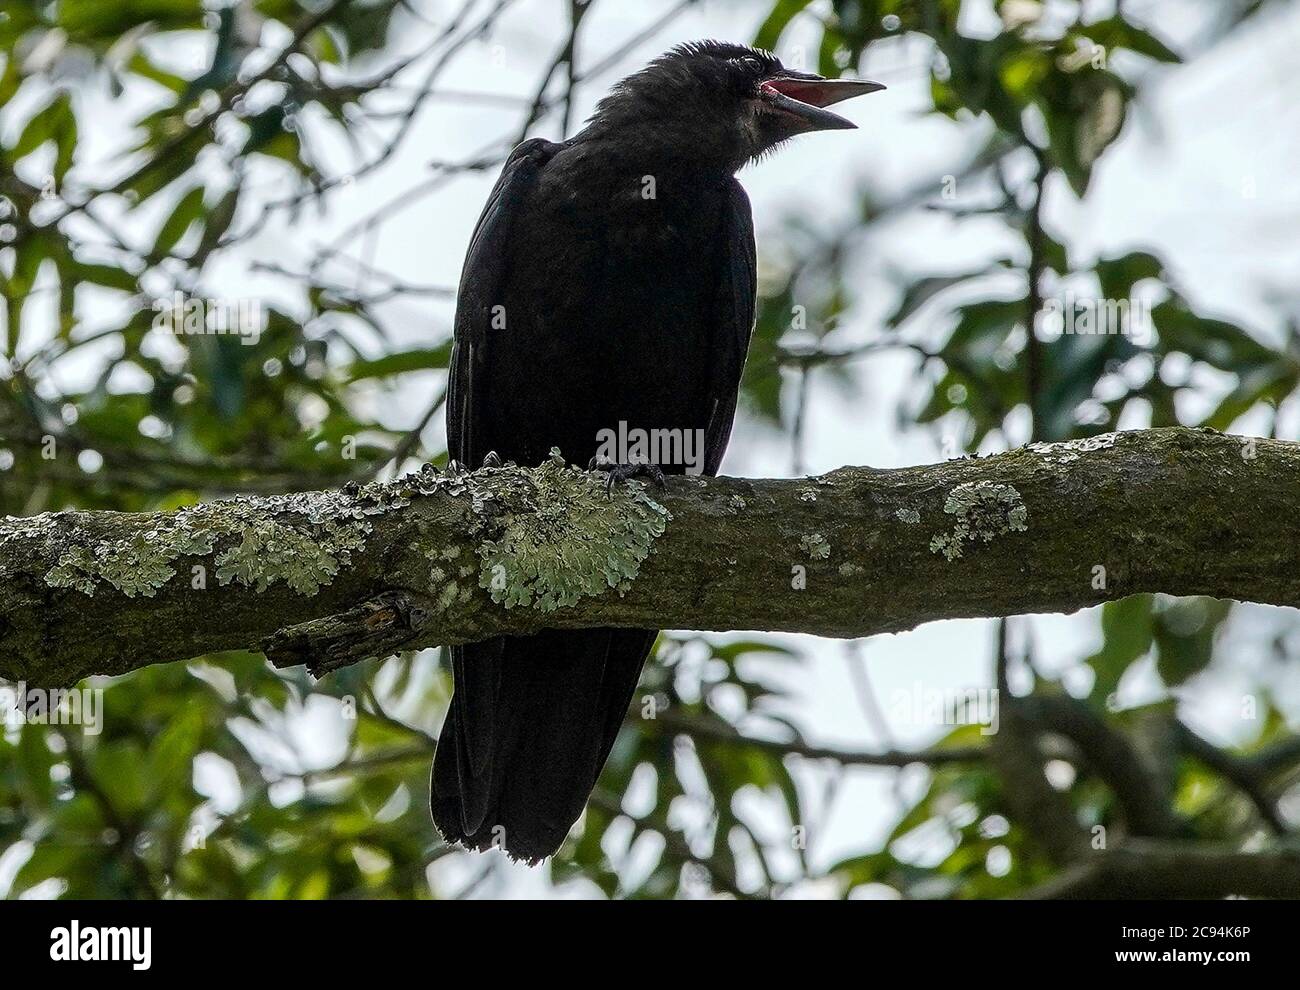 Big black bird clinging on a tree branch. Stock Photo